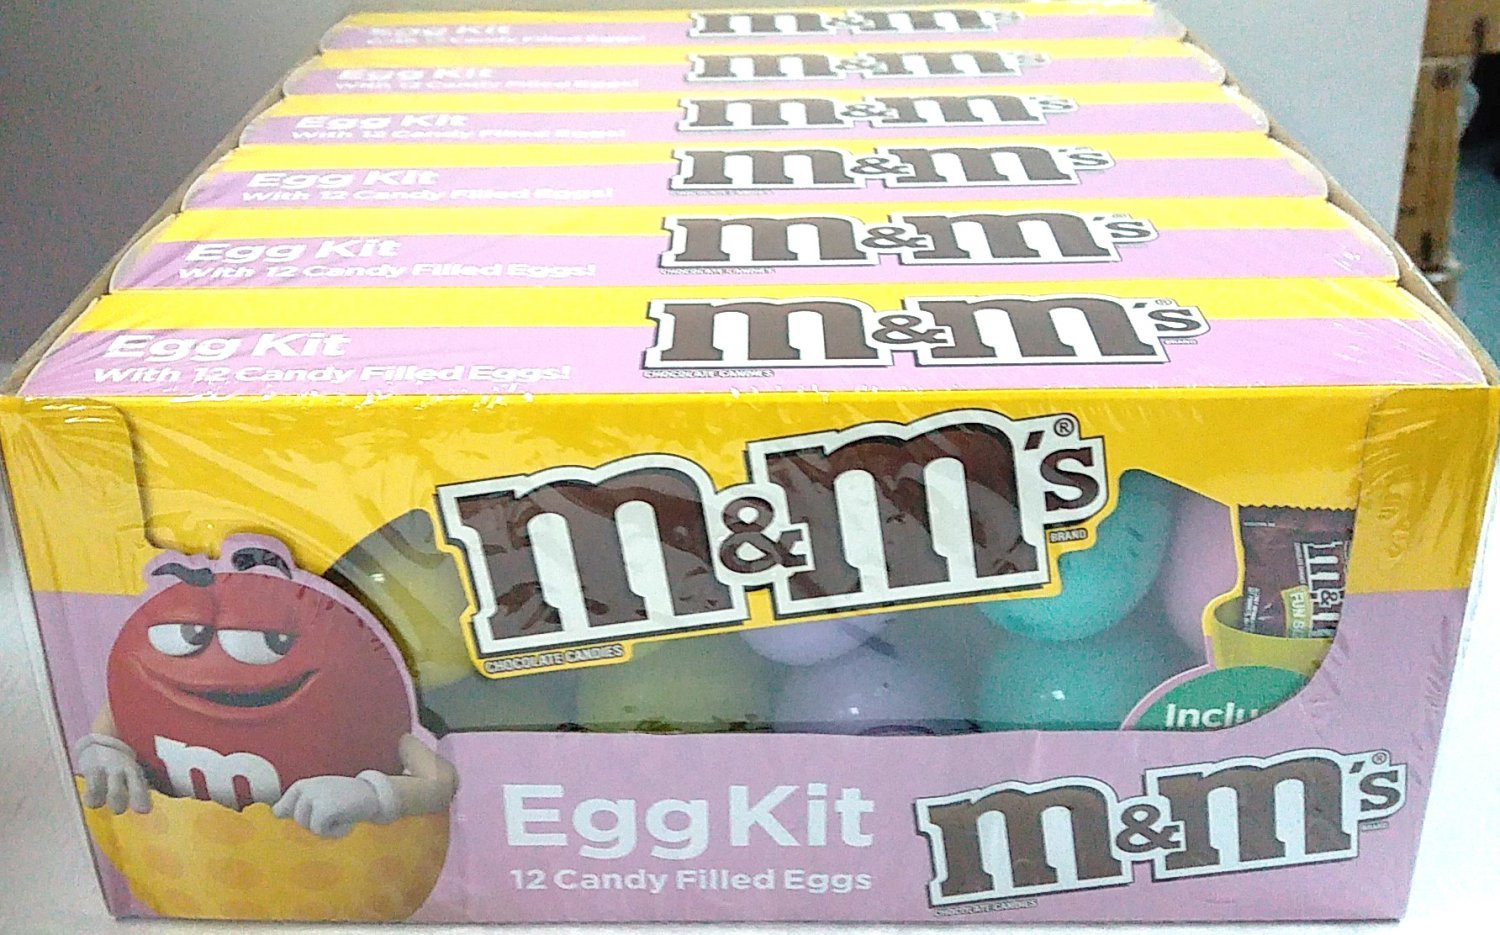  M&M's 12ct. Egg Hunt Box